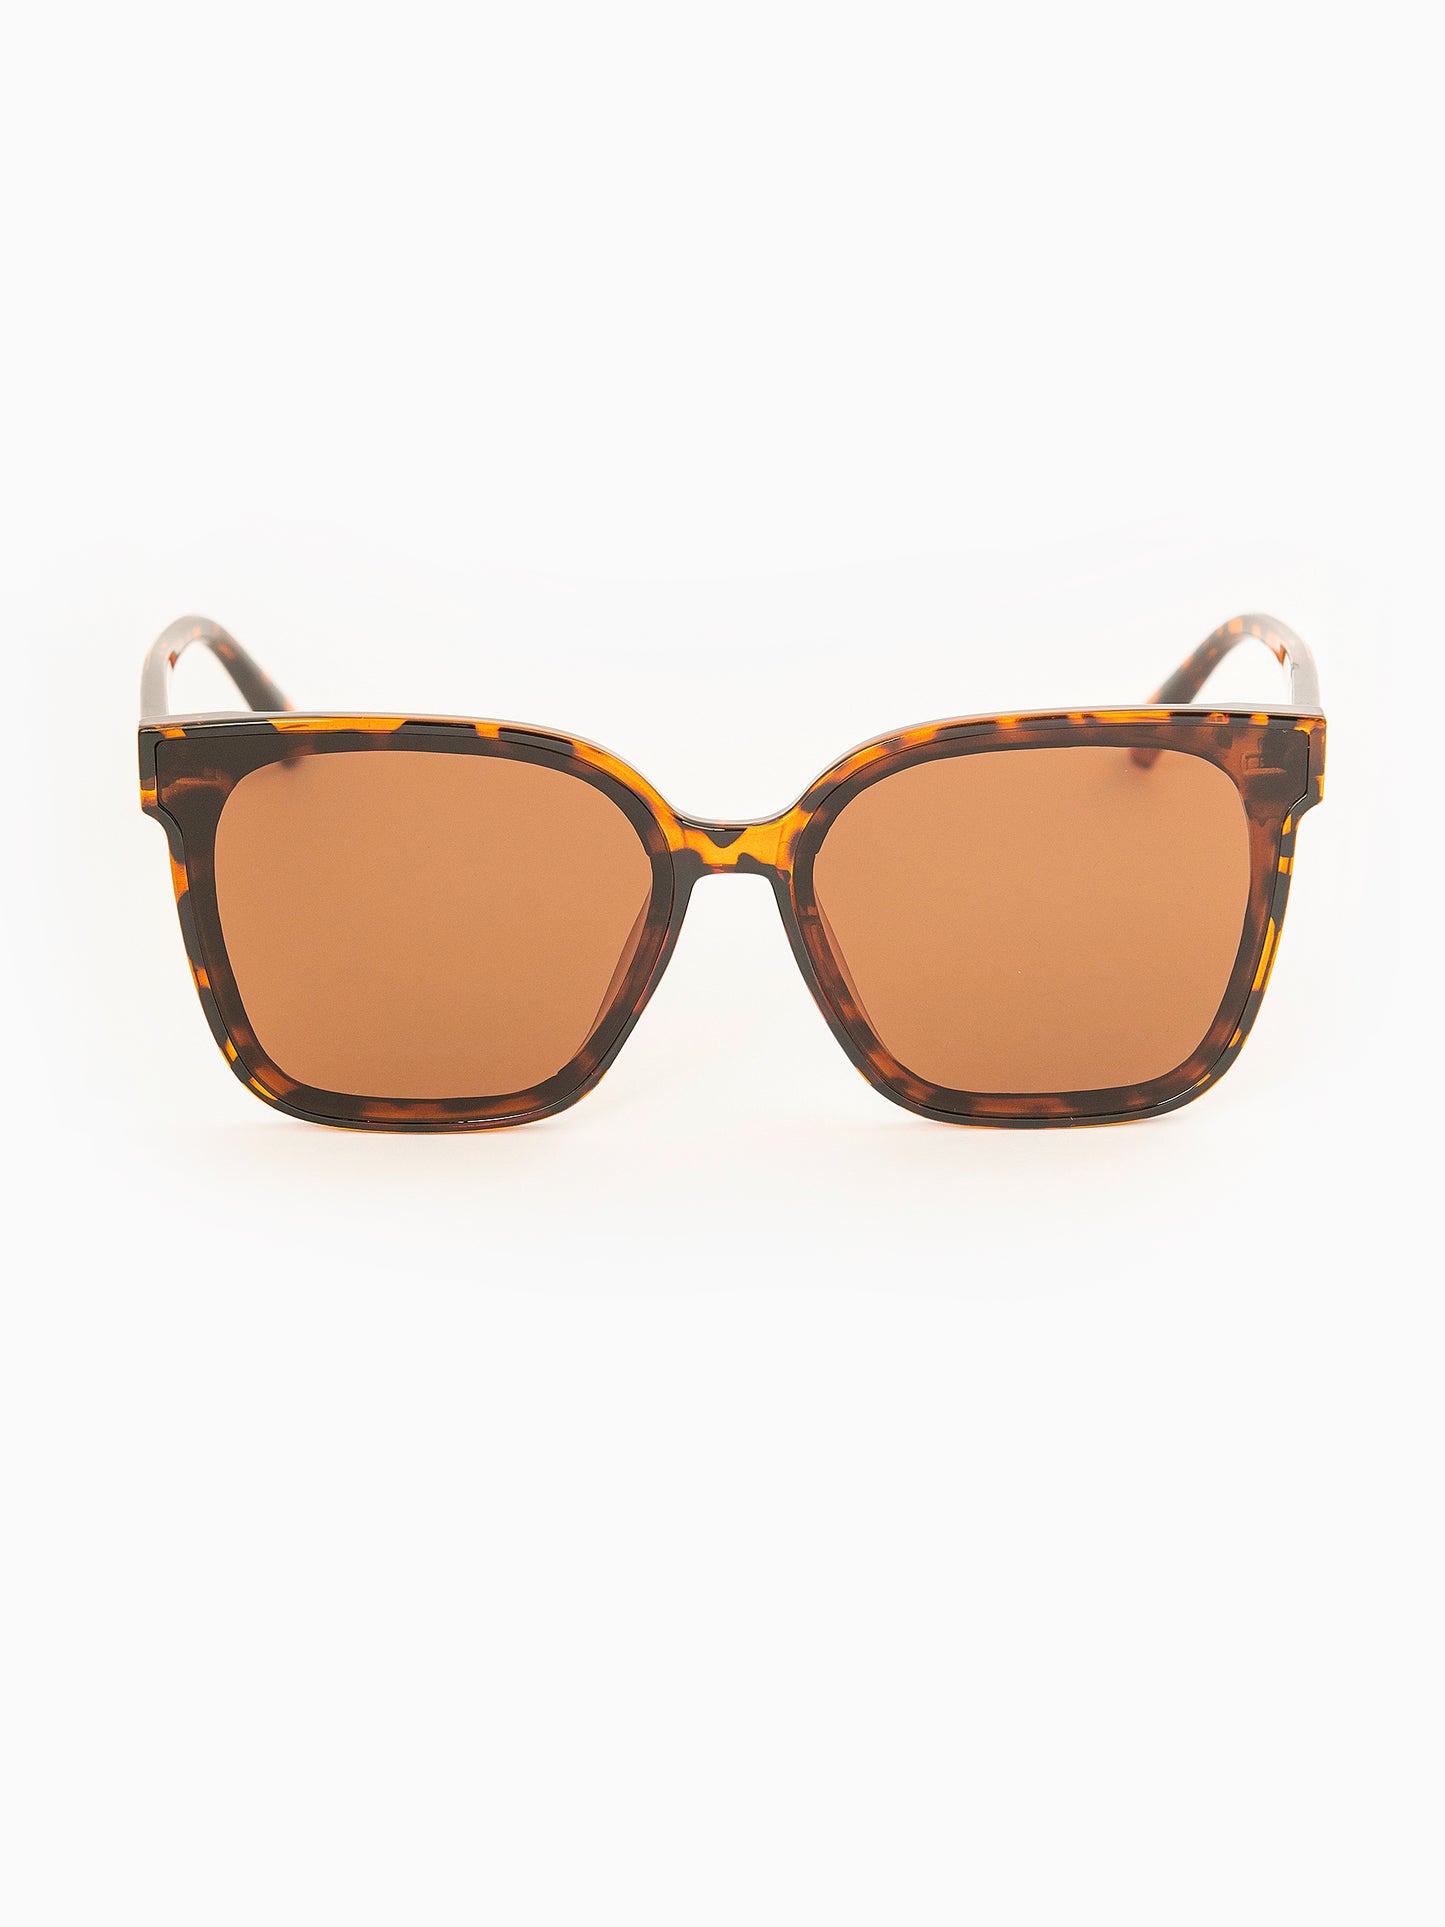 Leapord Print Sunglasses